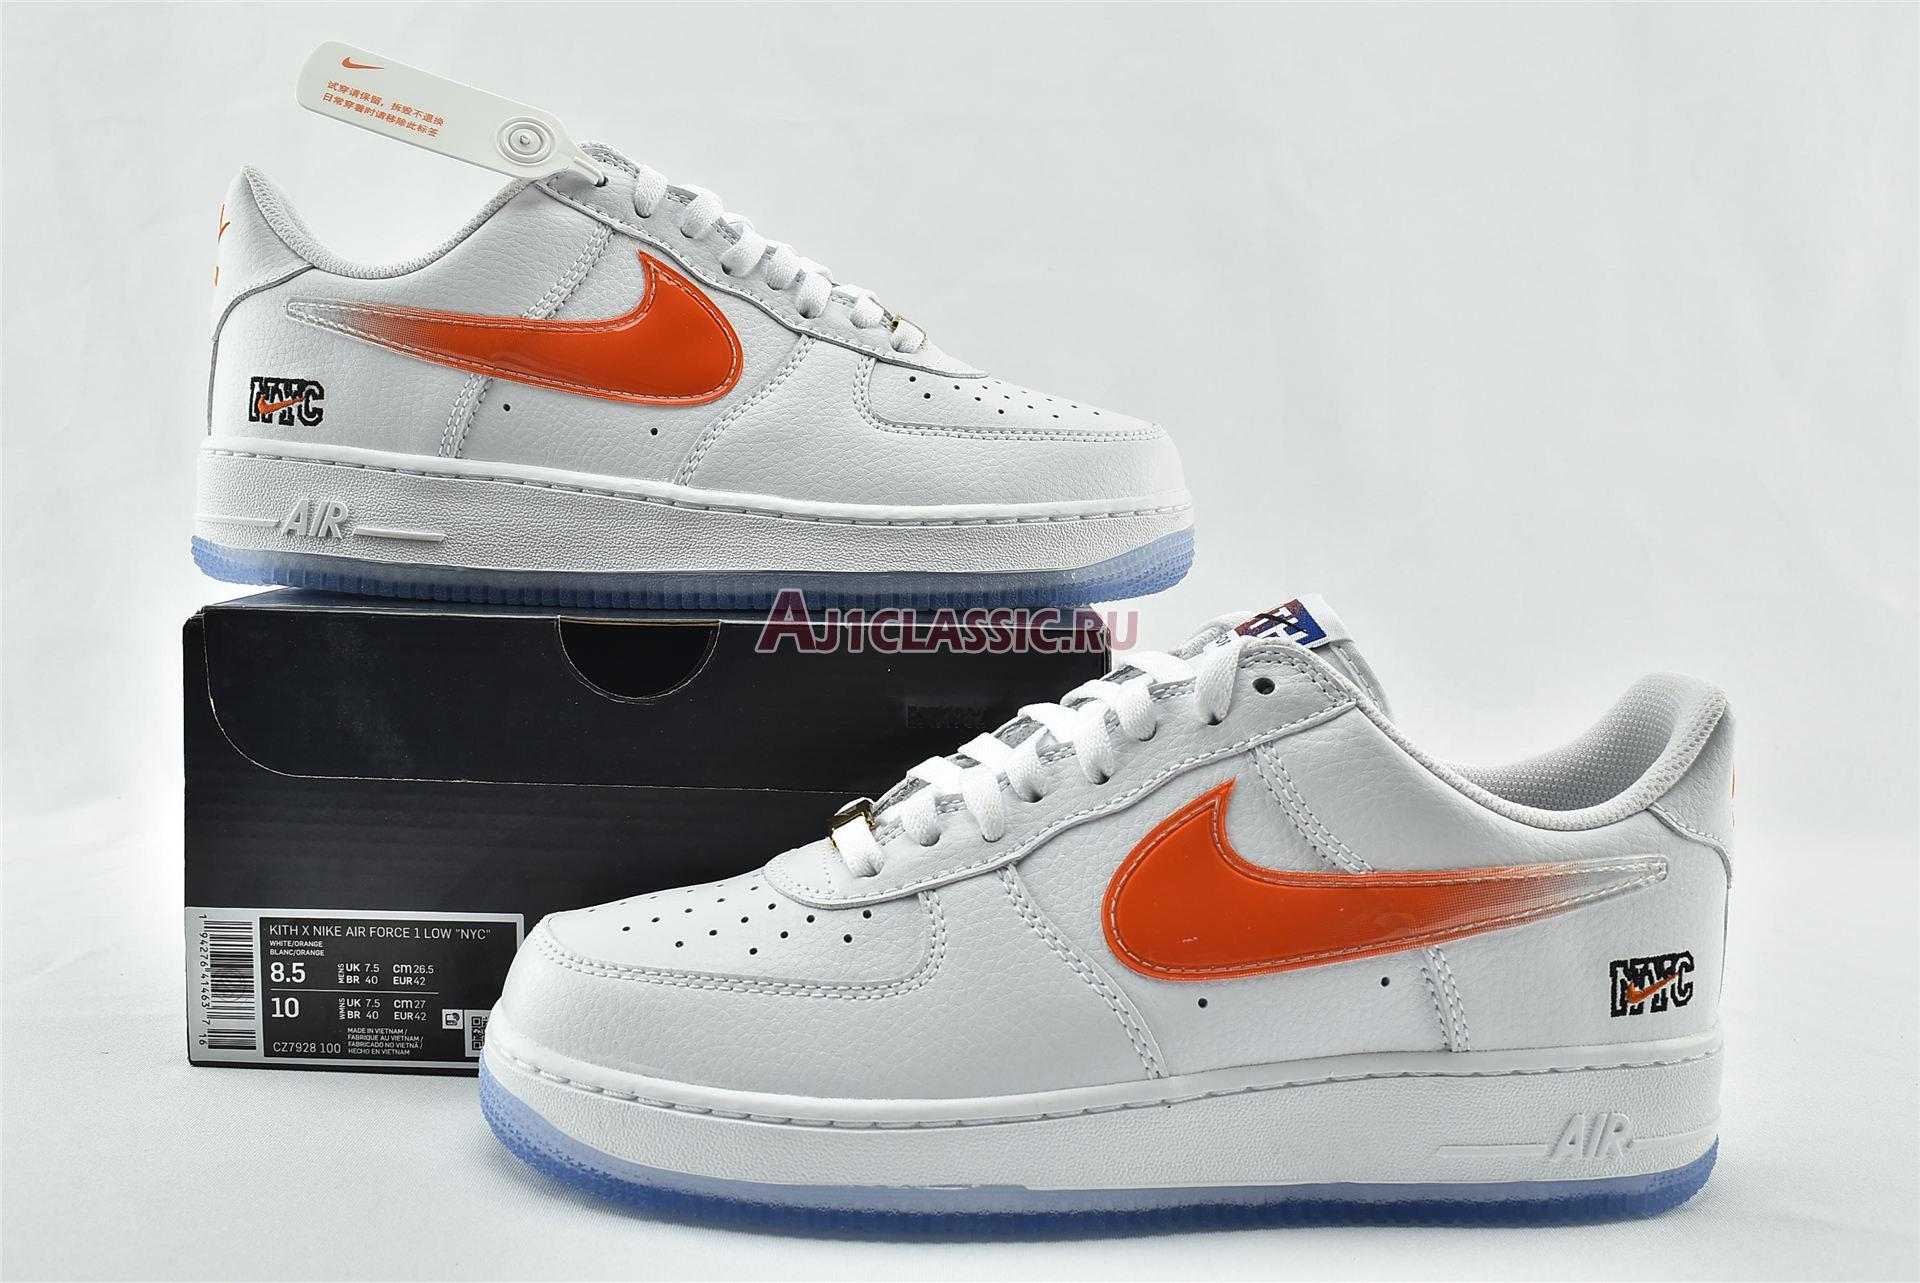 Kith x Nike Air Force 1 Low NYC - White CZ7928-100 White/Rush Blue/White/Brilliant Orange Sneakers